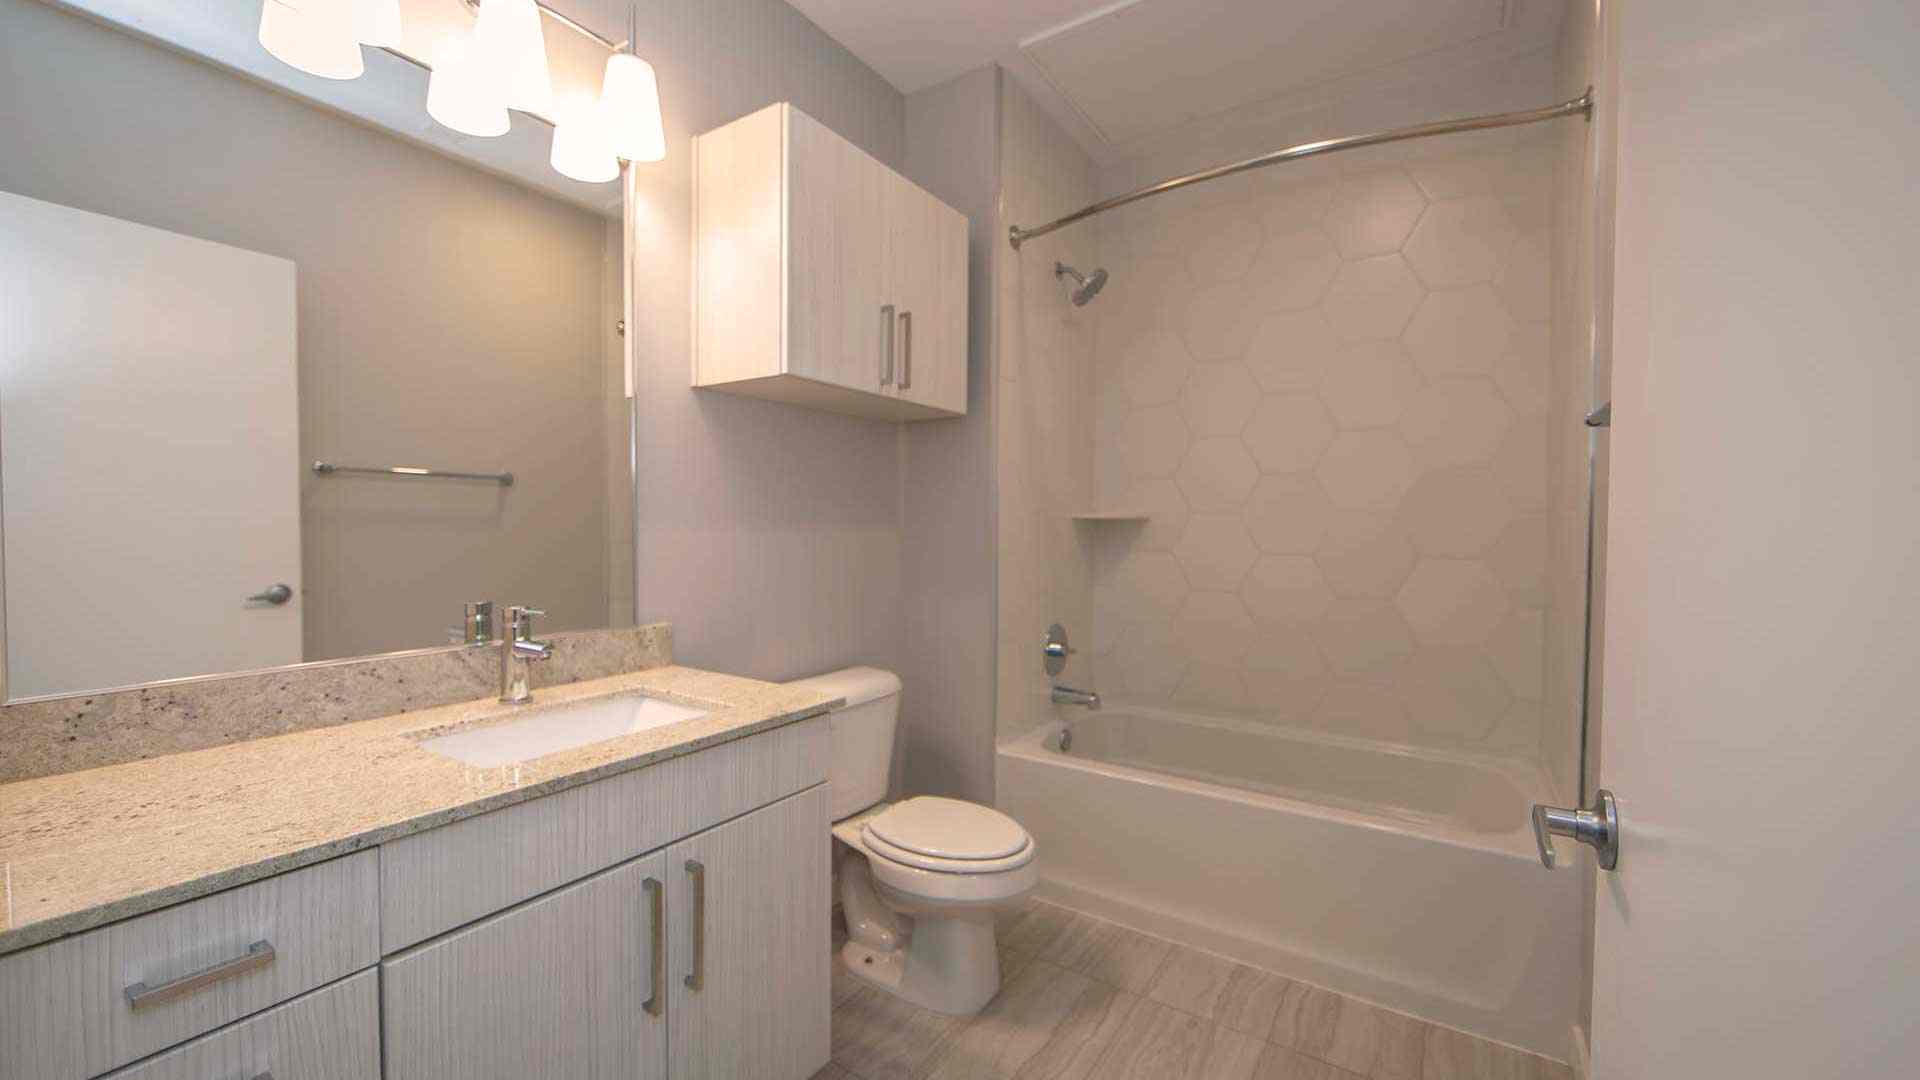 Reve apartments a1 bathroom cool decor view